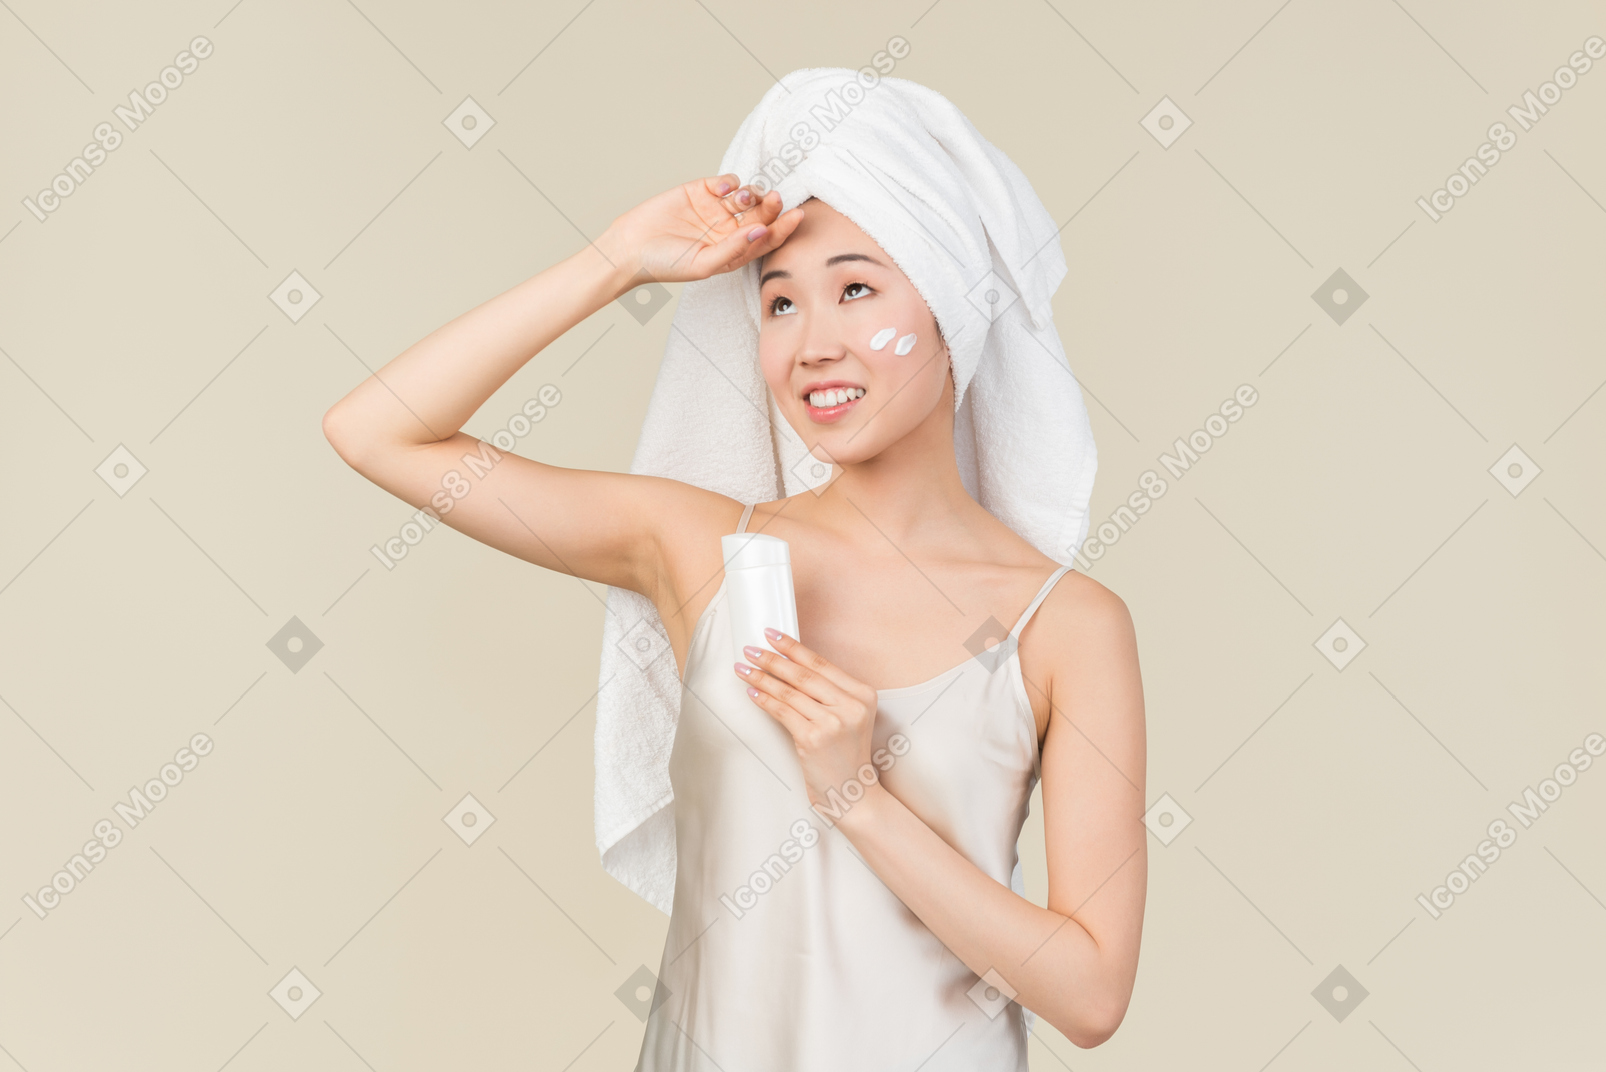 Dreamy asian woman in white towel holding cream bottle